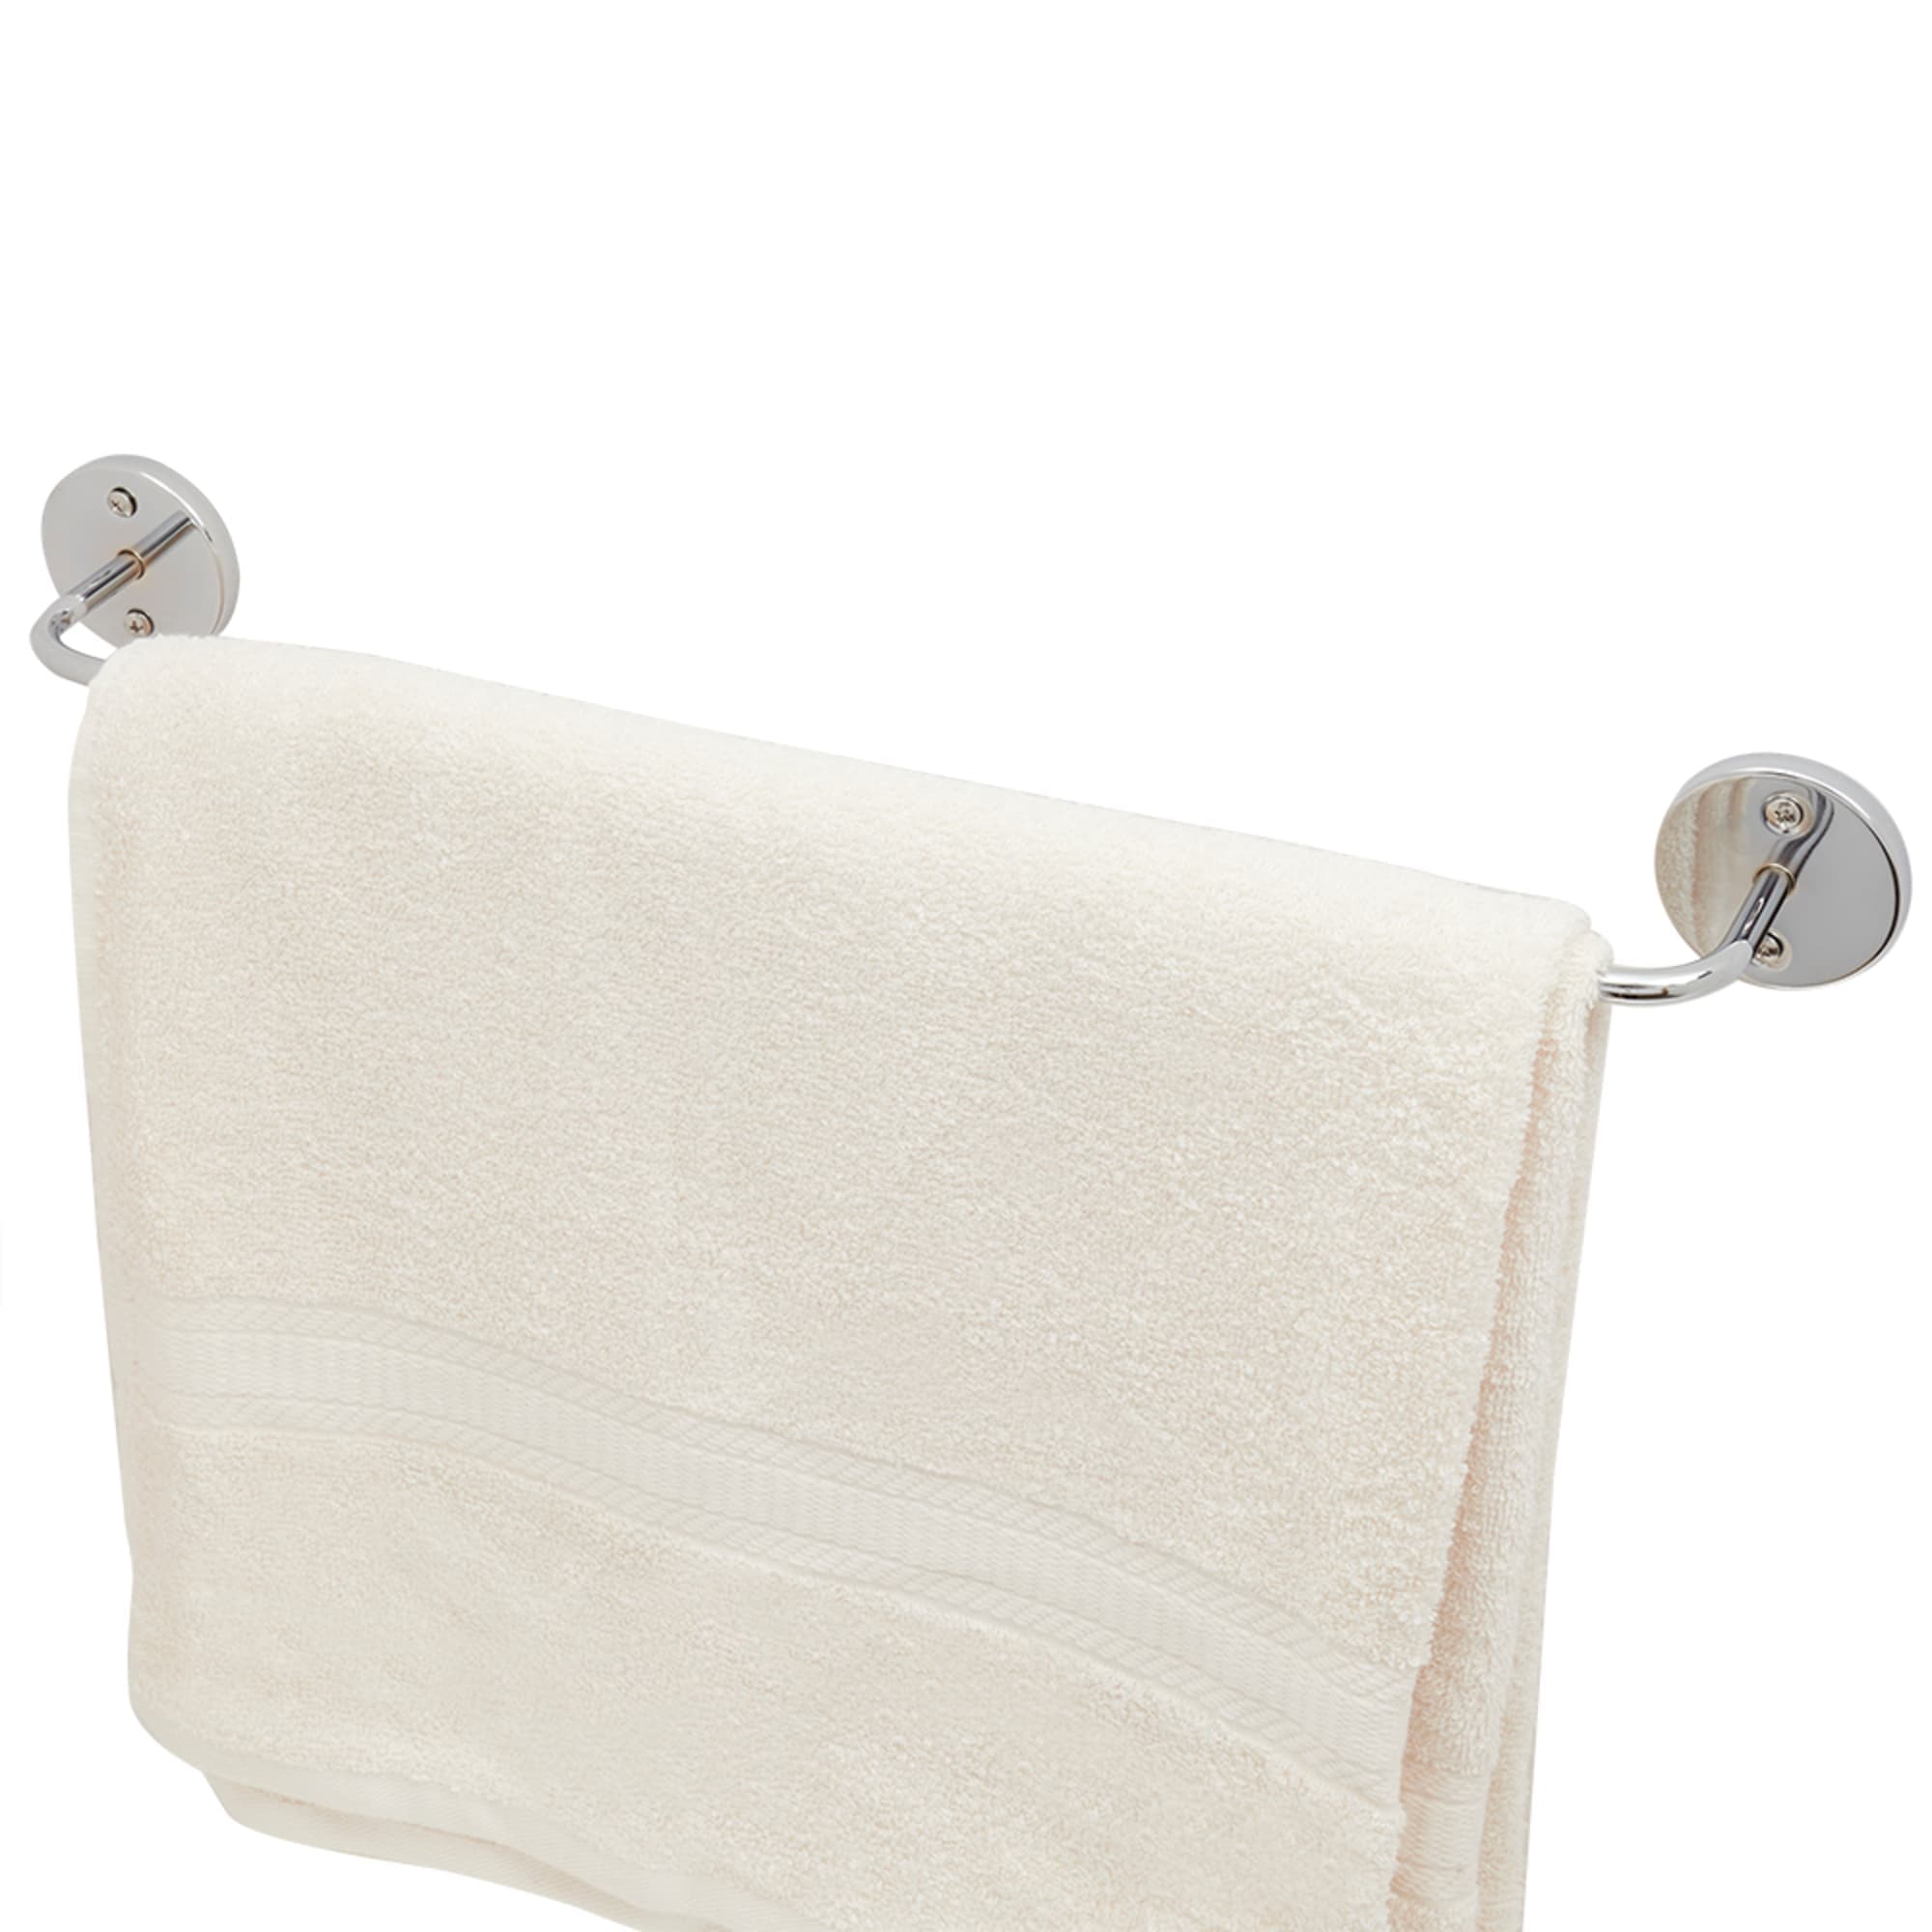 Home Basics Chelsea 24-inch Towel Bar $6 EACH, CASE PACK OF 12